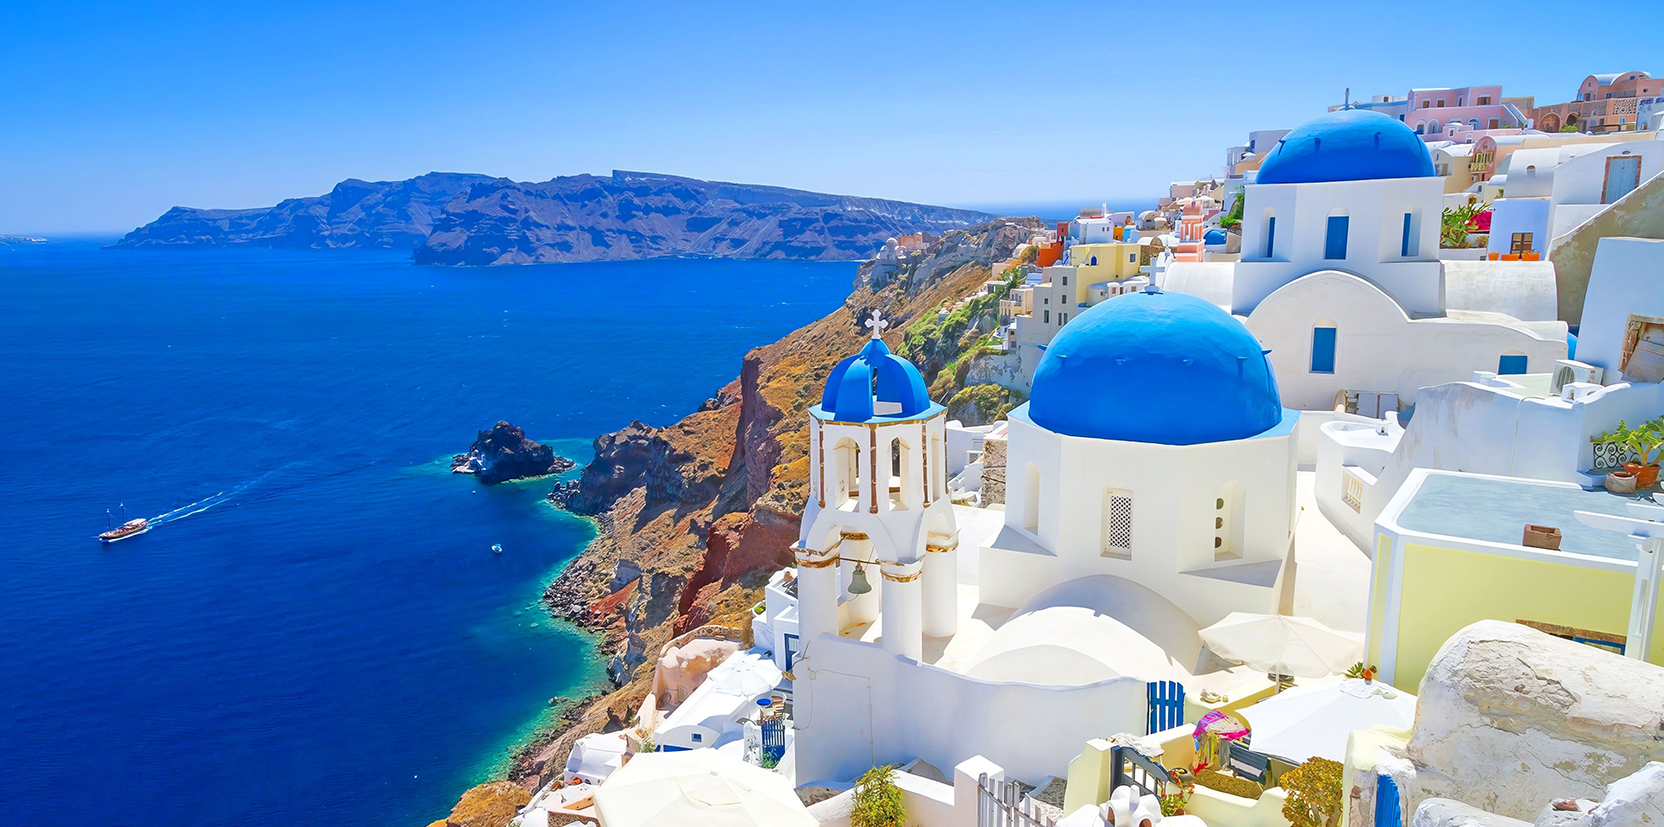 JAMES the BnB Butler Kos Greece full service luxury holiday villa rentals & yacht charters